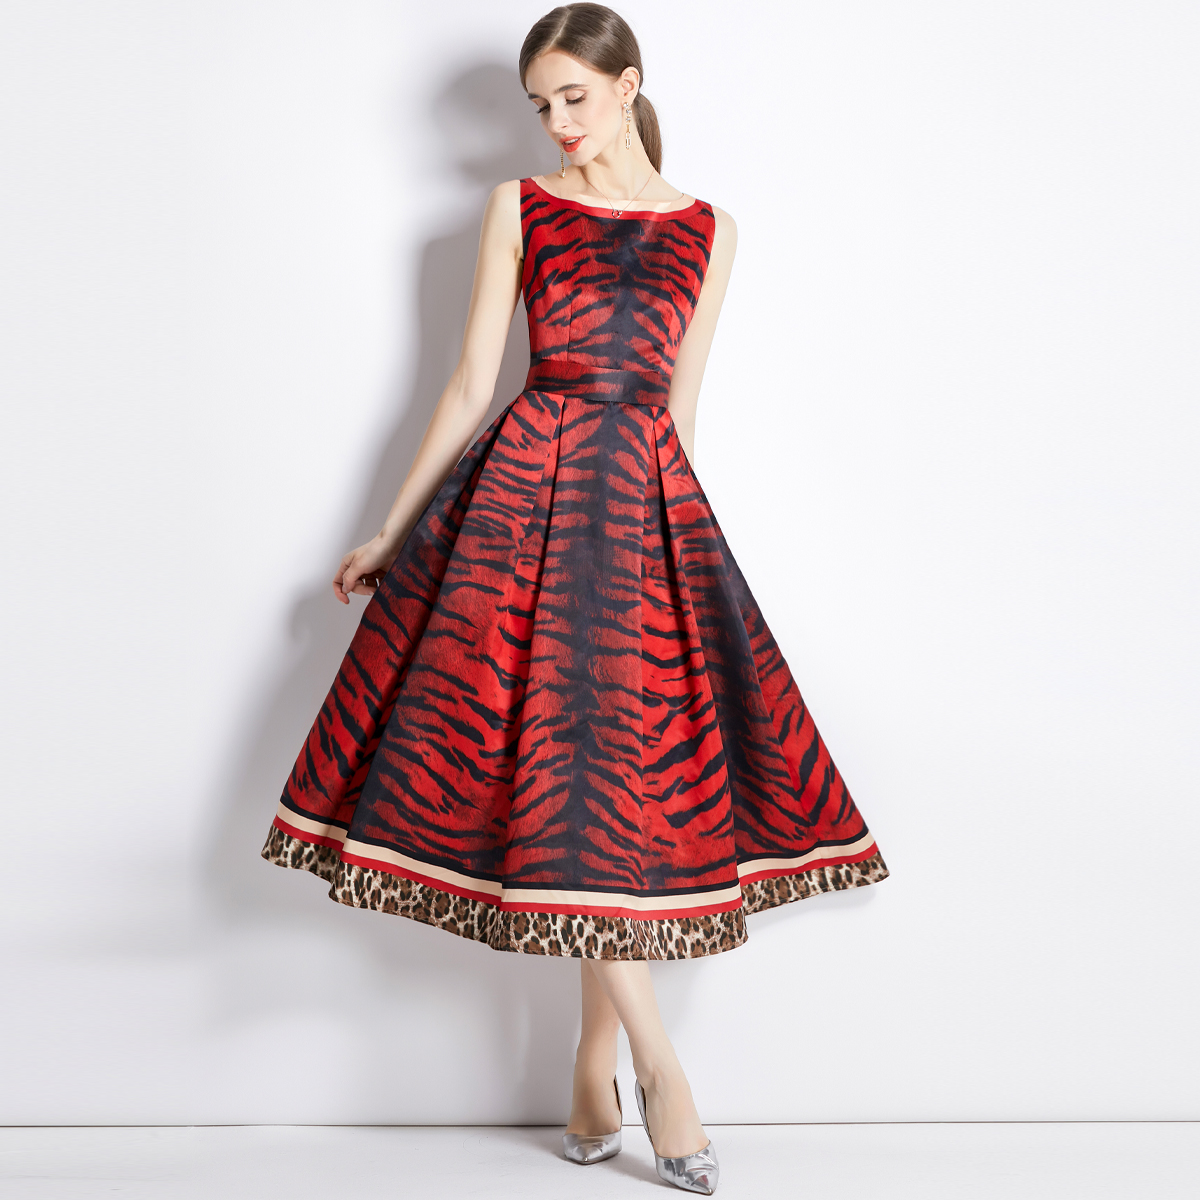 Pinched waist autumn printing dress